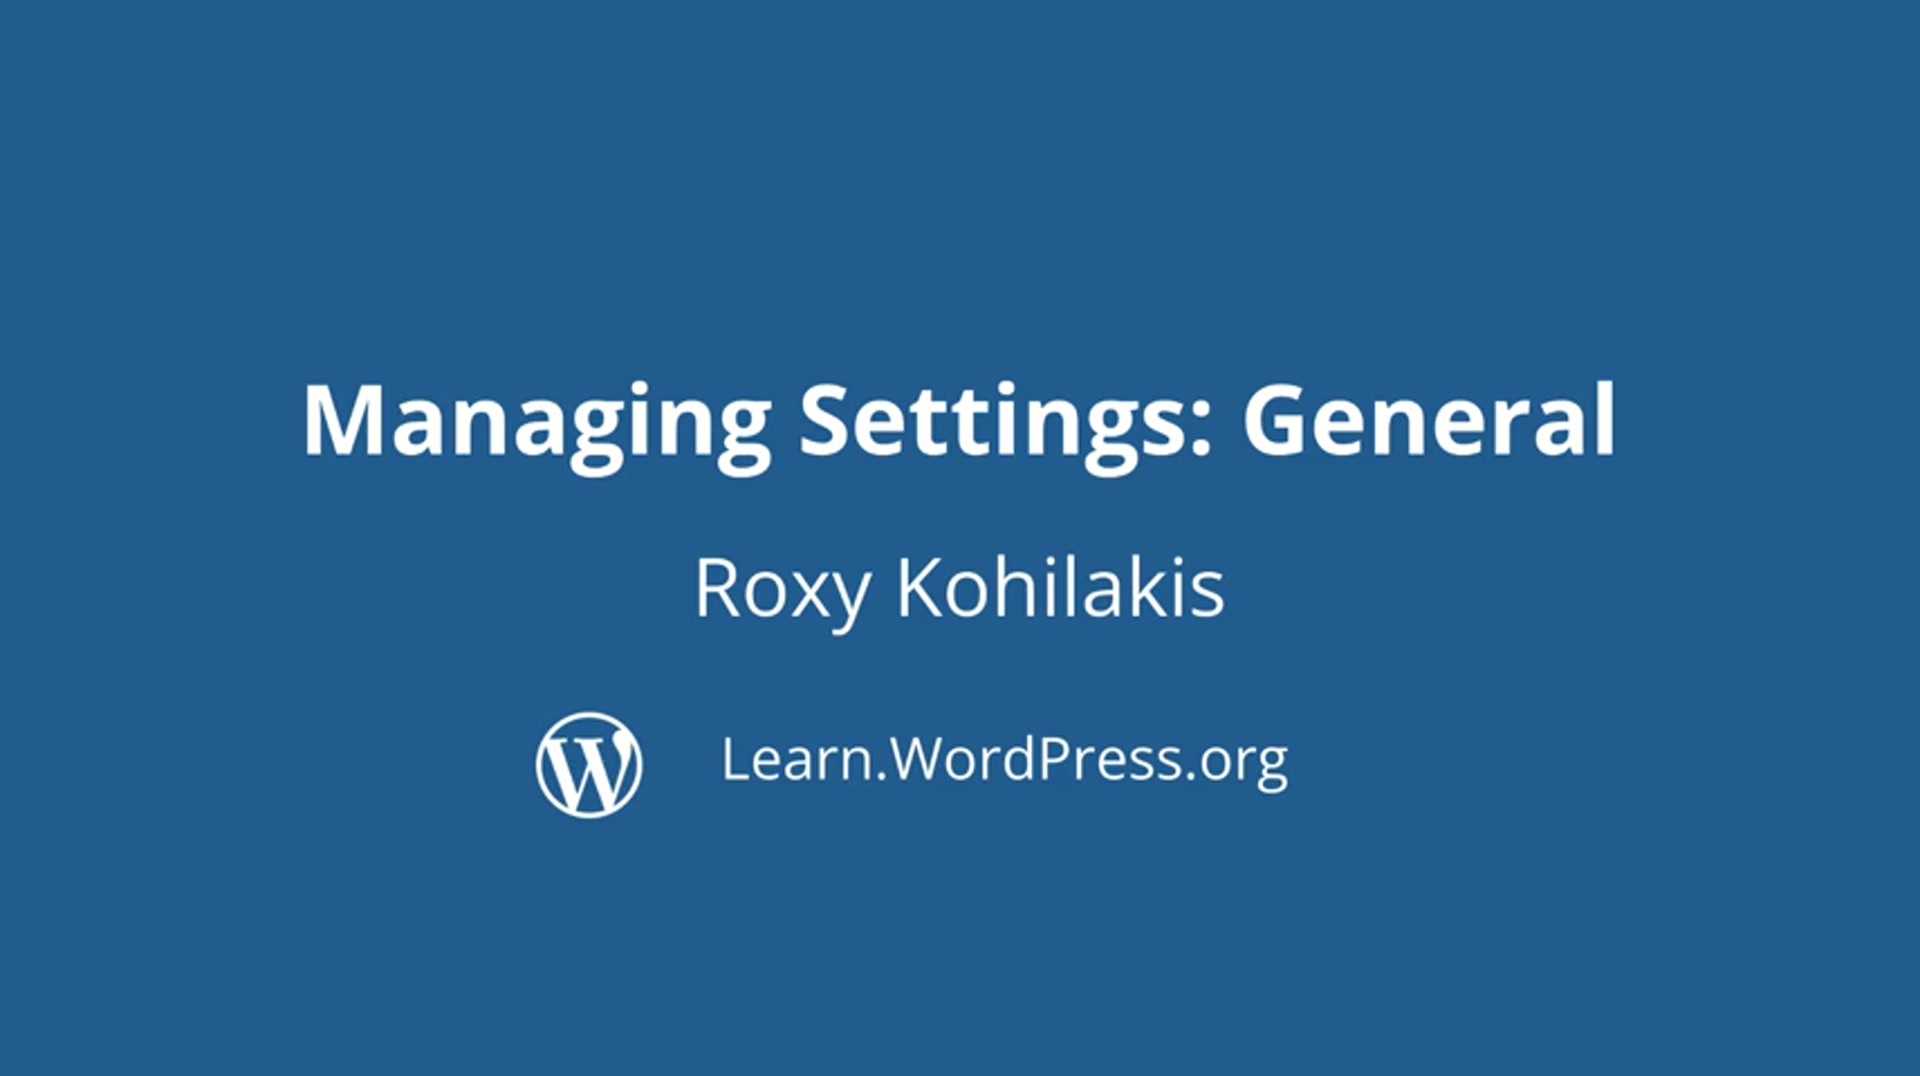 Roxy Kohilakis: Managing General Settings